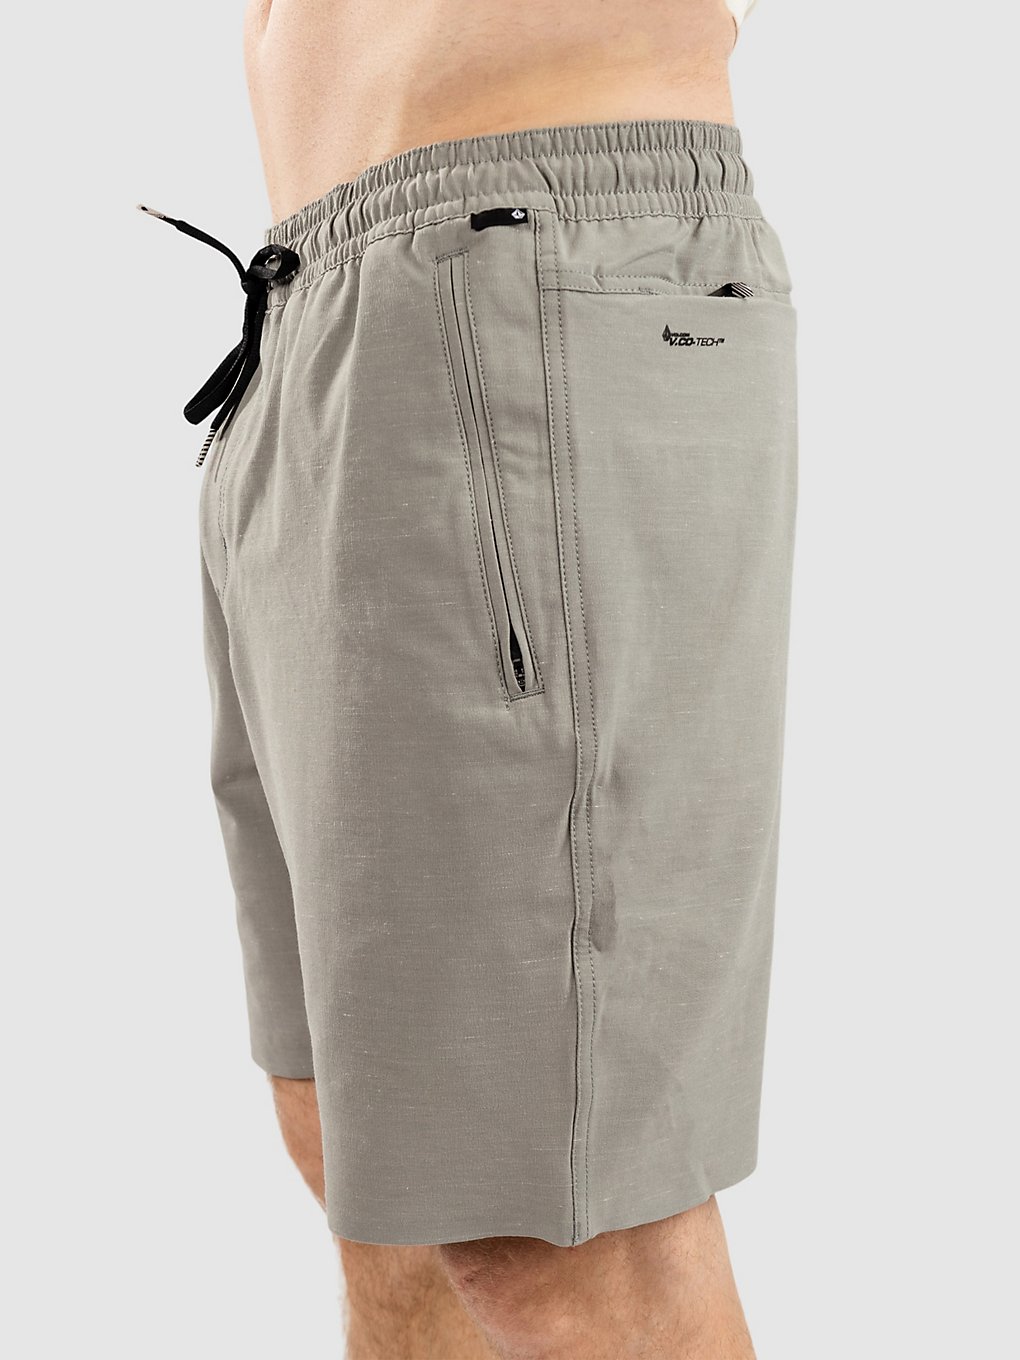 volcom wrecpack hybrid 19 shorts moonbeam